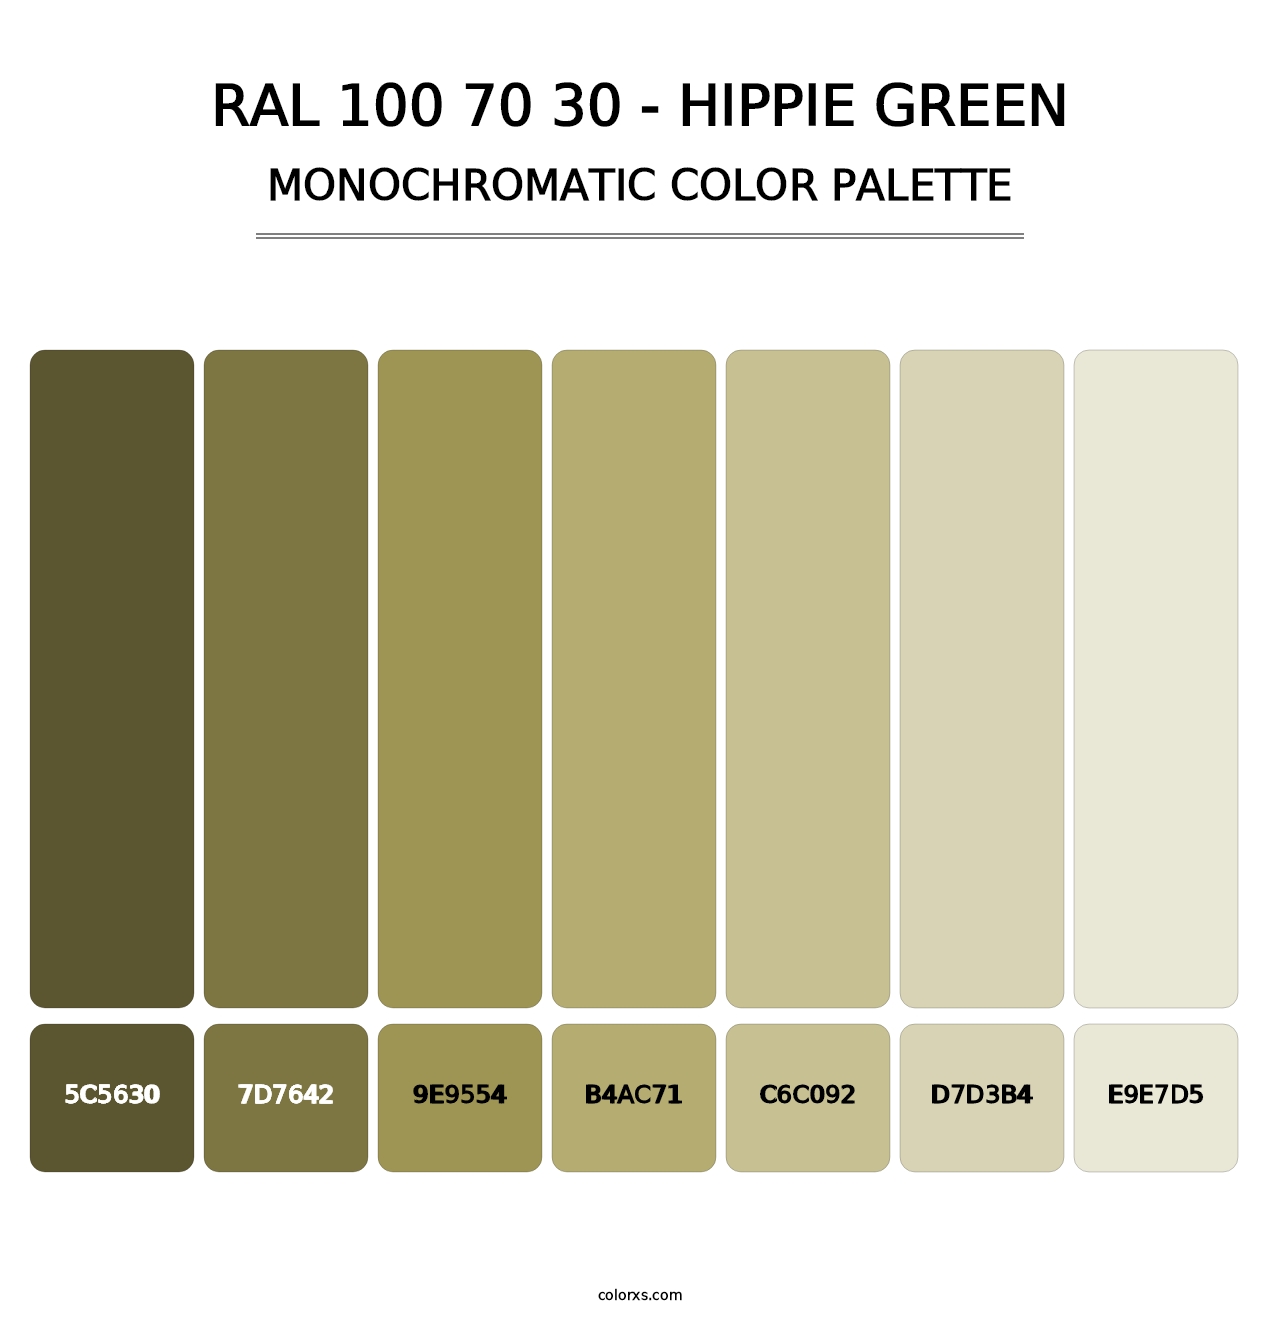 RAL 100 70 30 - Hippie Green - Monochromatic Color Palette